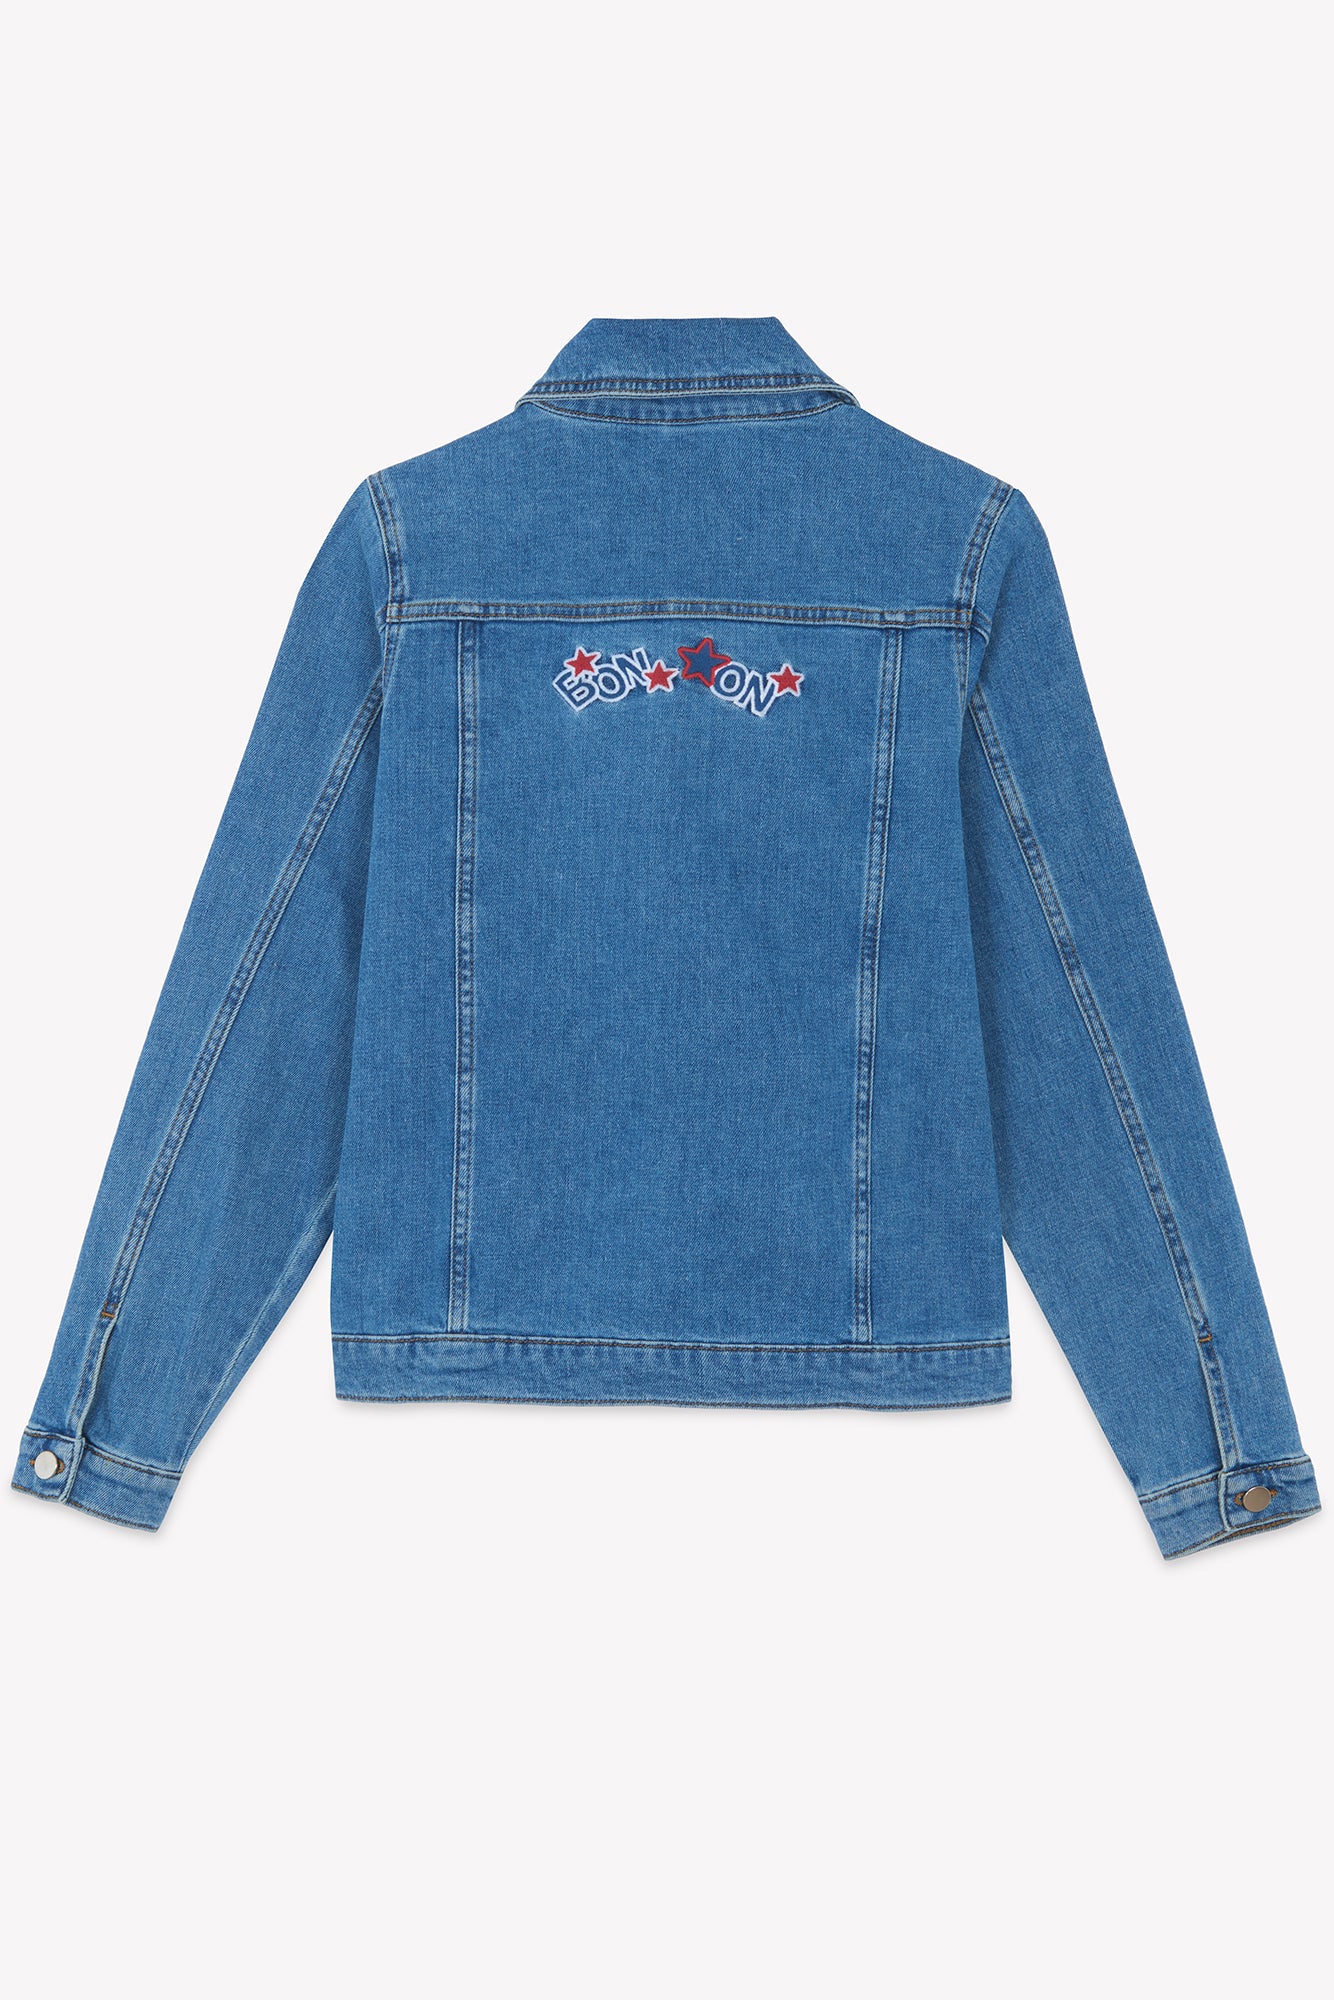 Jacket - Nantucket denim cotton embroidered kr